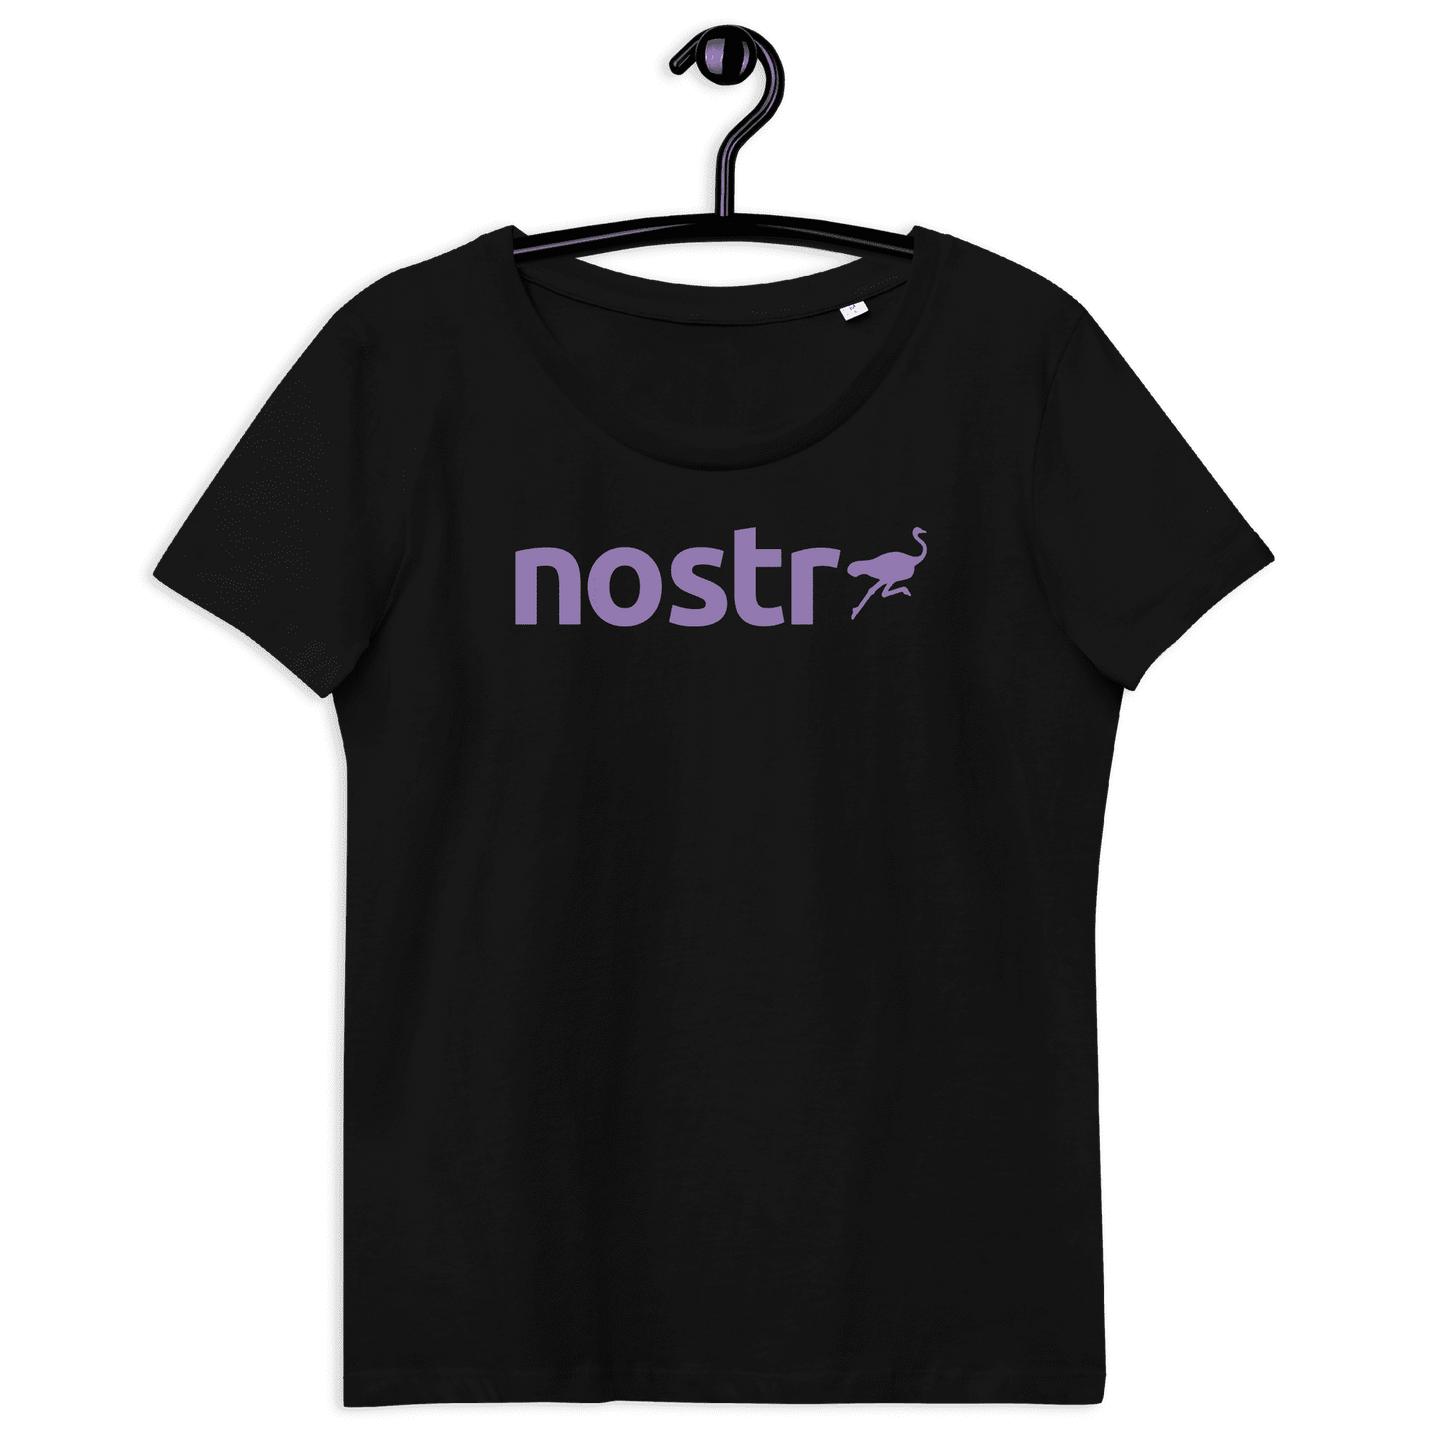 Front view of a black nostr shirt for women.